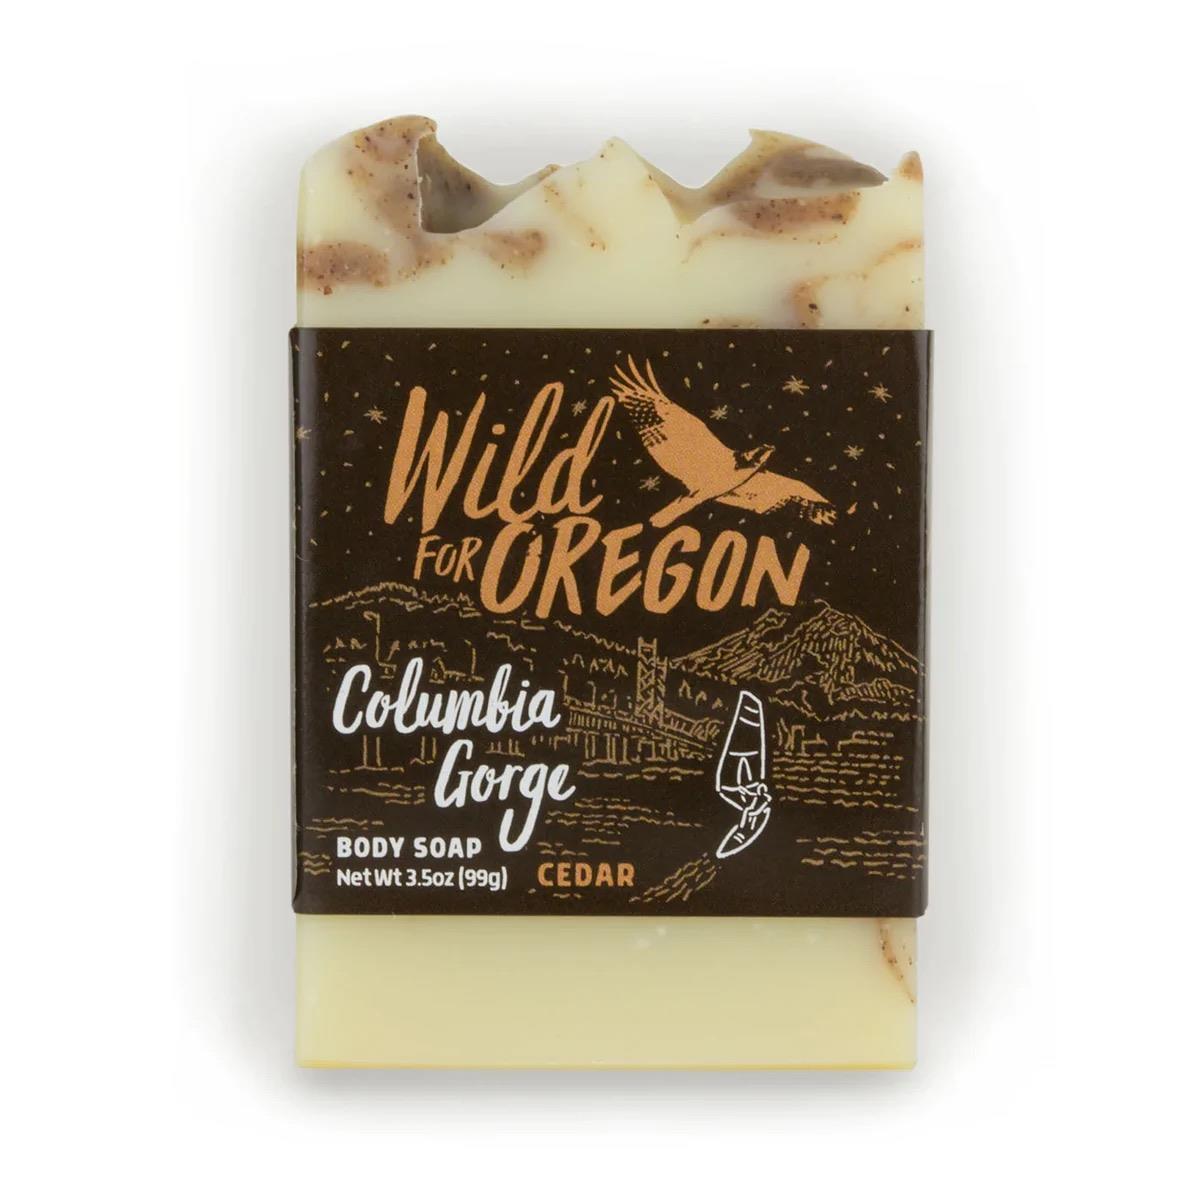 Wild For Oregon Columbia Gorge Cedar Body Soap 3.5oz NWFG - Wild For Oregon